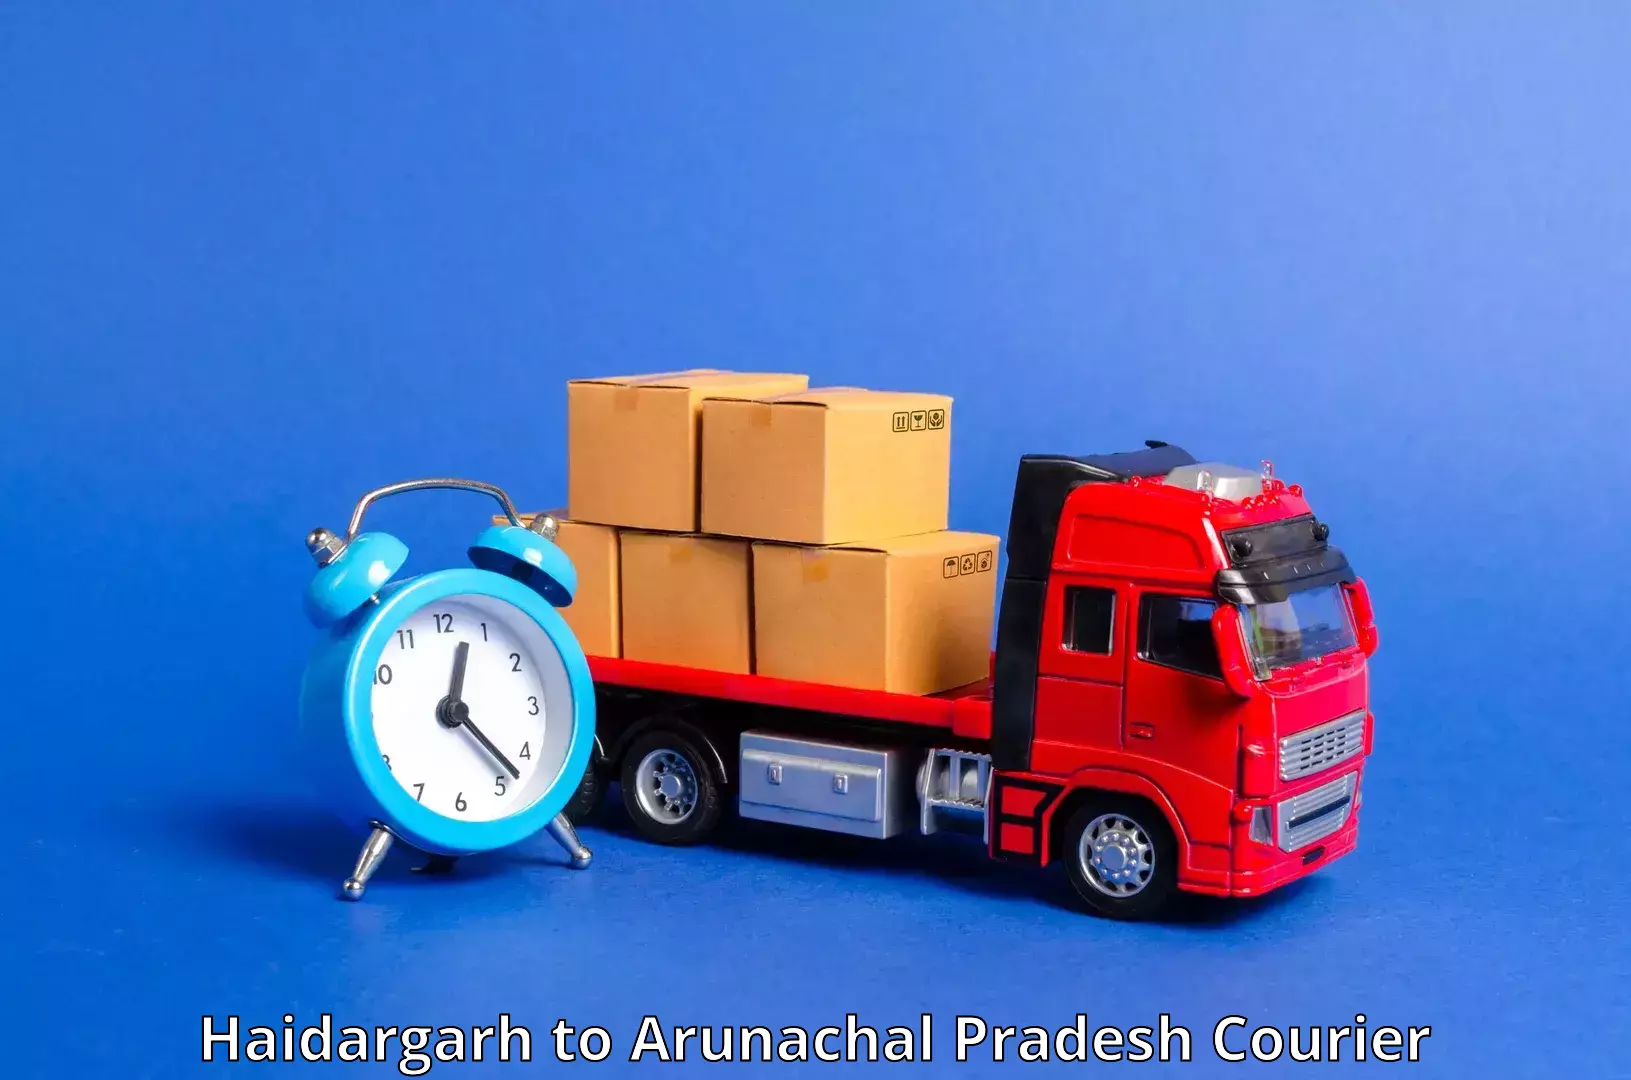 High-speed parcel service Haidargarh to Chowkham